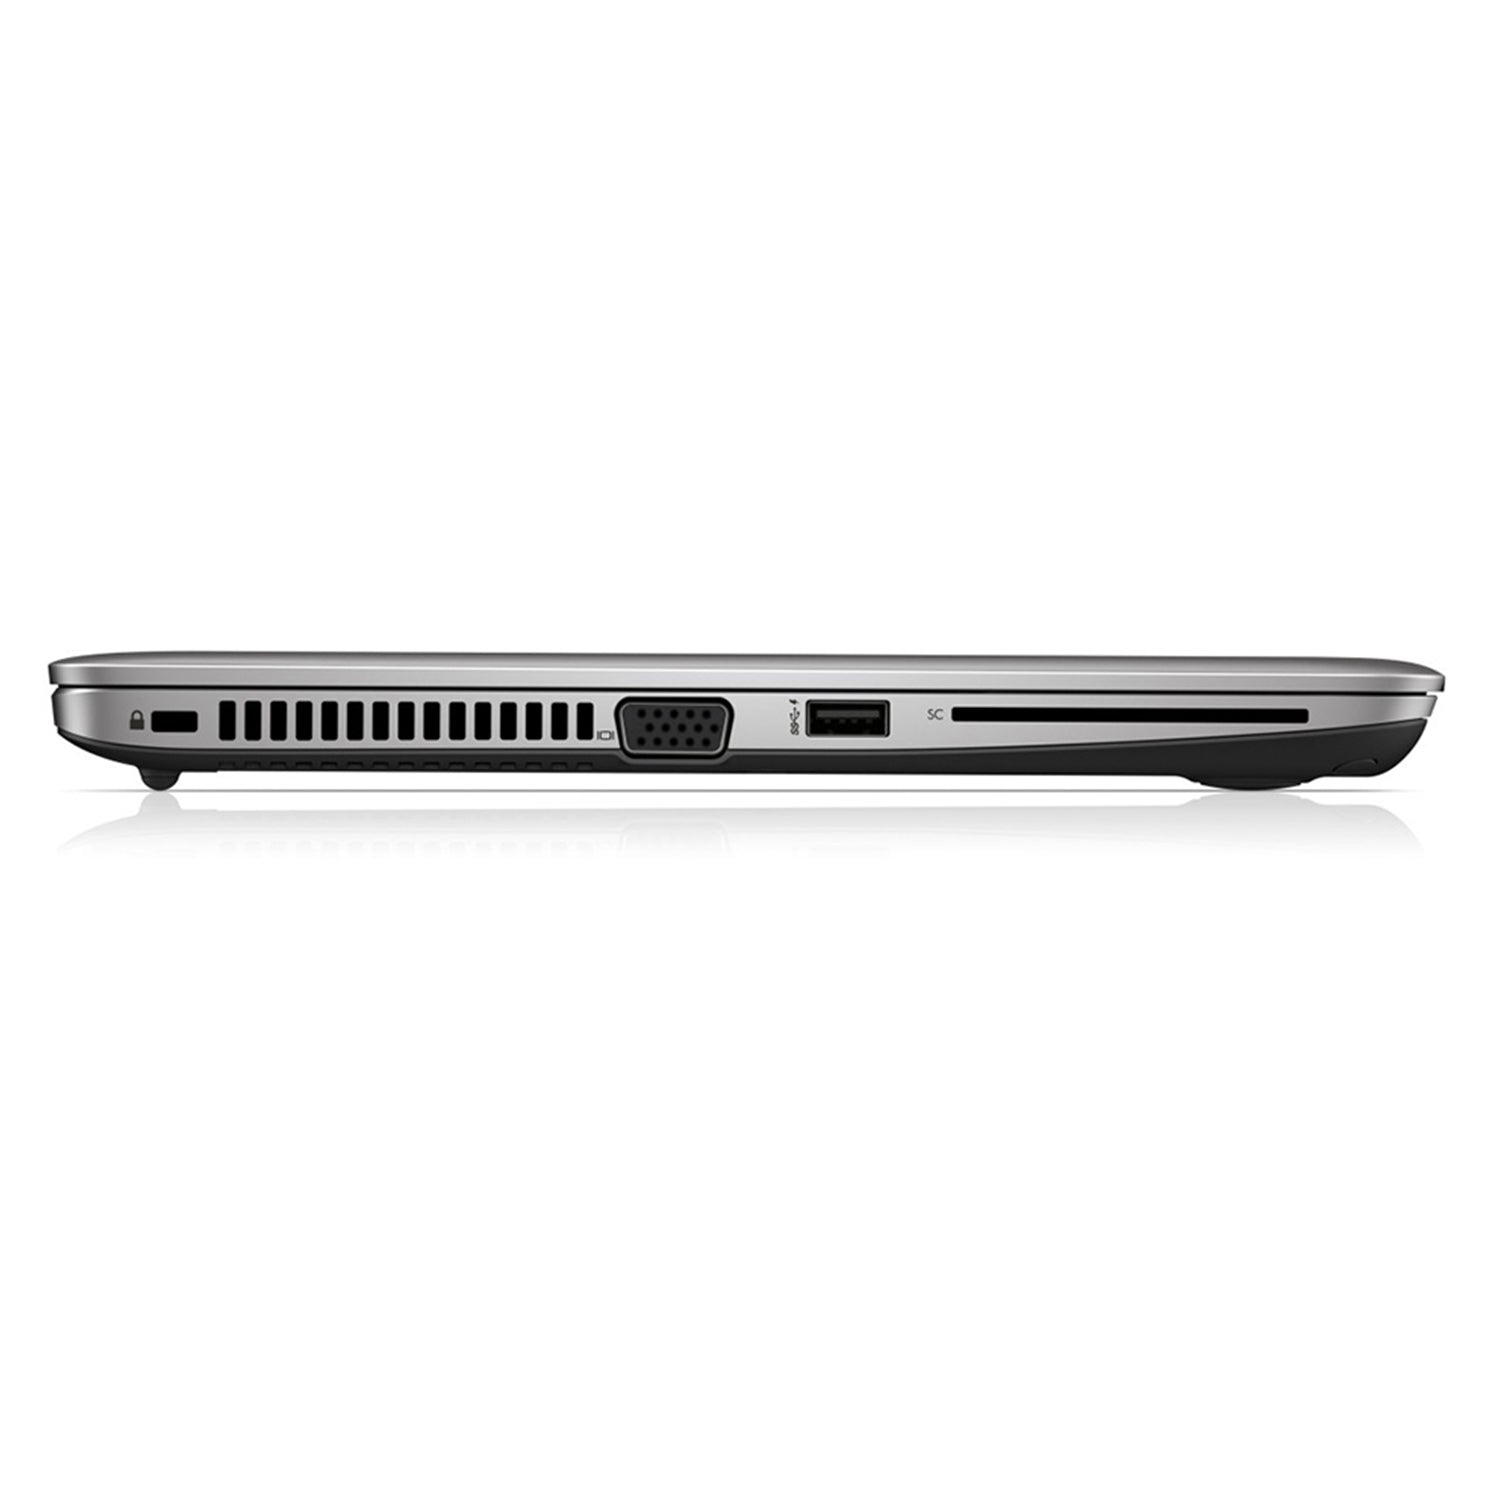 HP EliteBook 820 G4 Laptop 12.5 inch FHD Display, Intel Core i7-7600U upto 3.90 GHz, 8GB - 16 GbRAM, 256GB -1TBSSD, Touch Screen, Backlit Keyboard, Webcam, WiFi, Windows 10 Pro - Refurbished